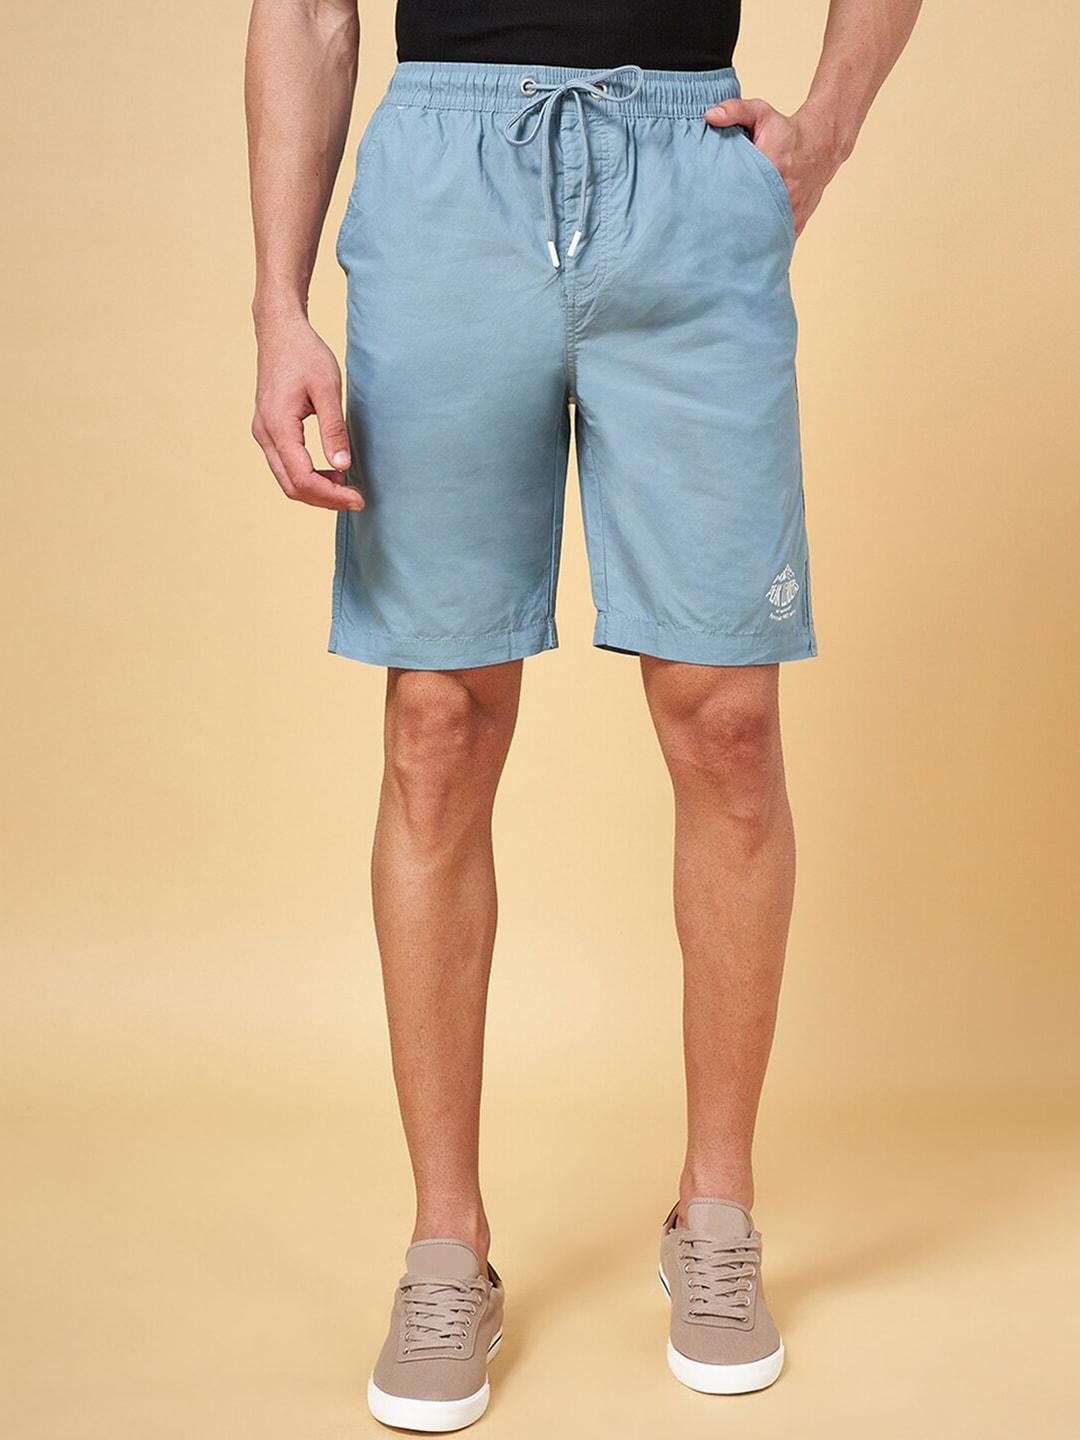 urban ranger by pantaloons men cotton slim fit shorts